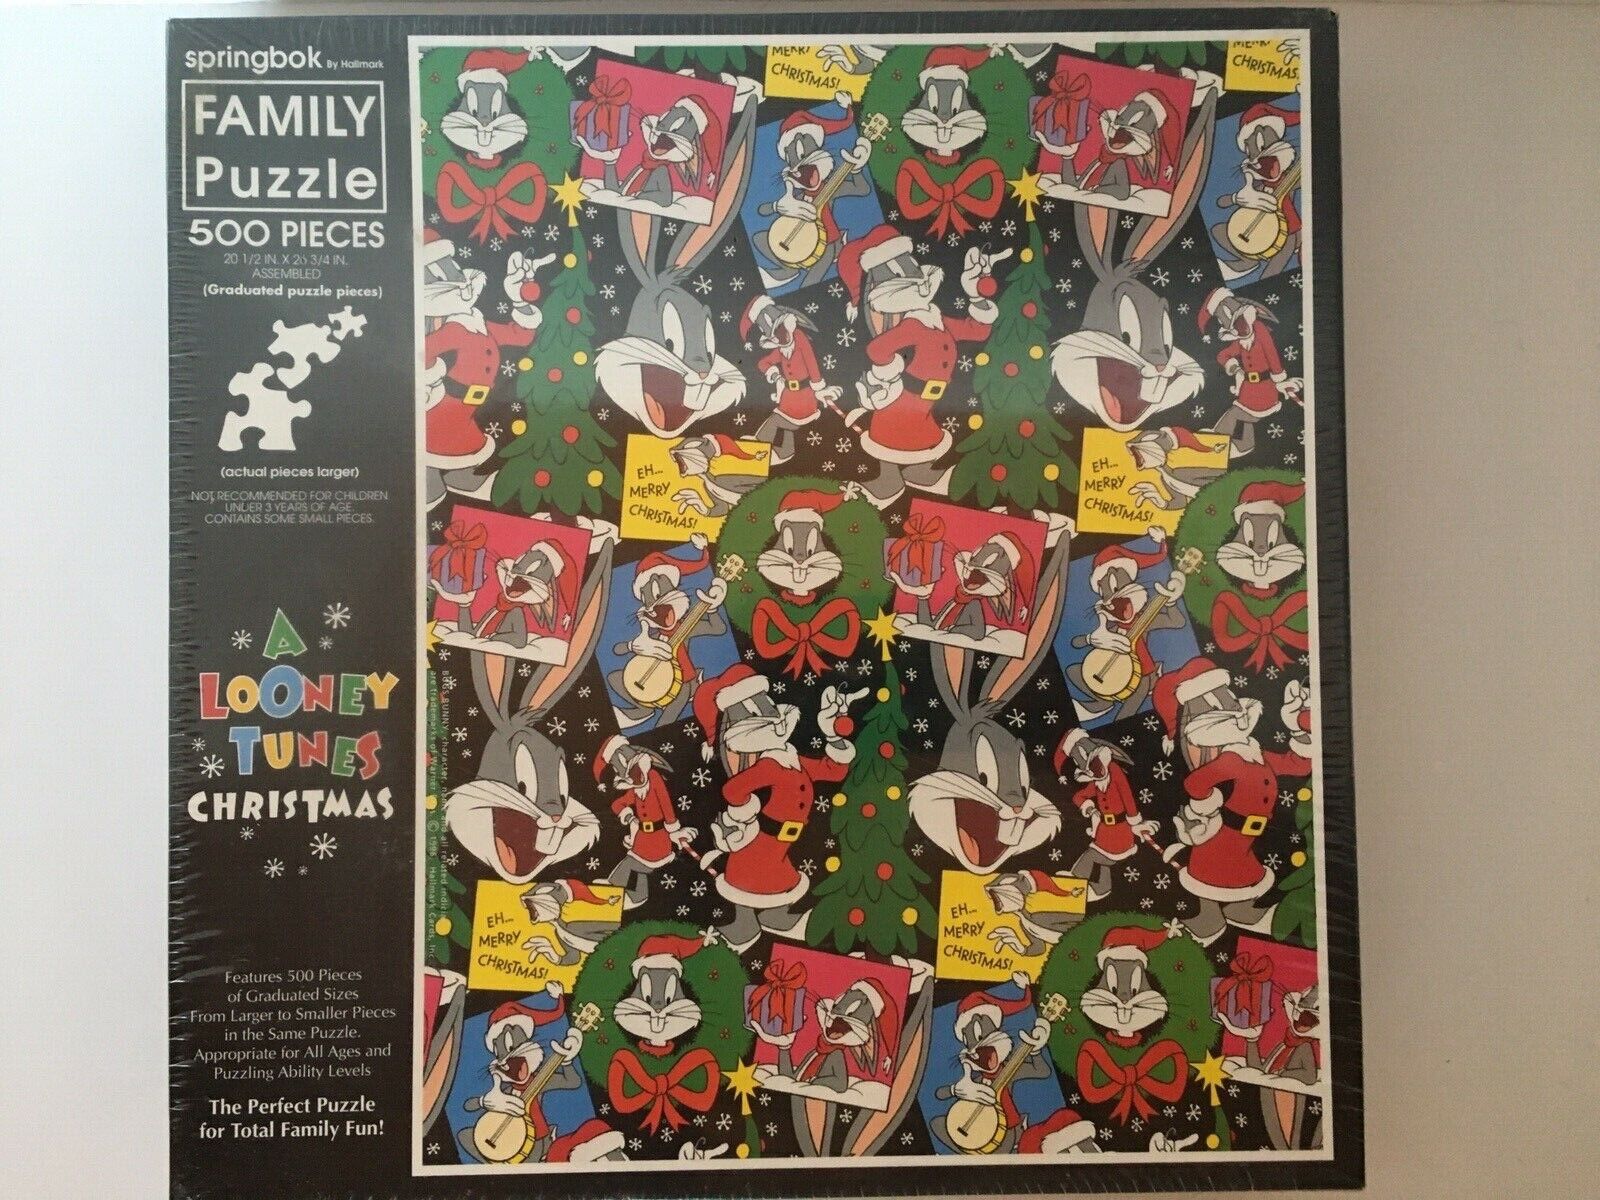 Springbok Puzzle A Looney Tunes Christmas 500 Piece XZL4601 1990s Springbok